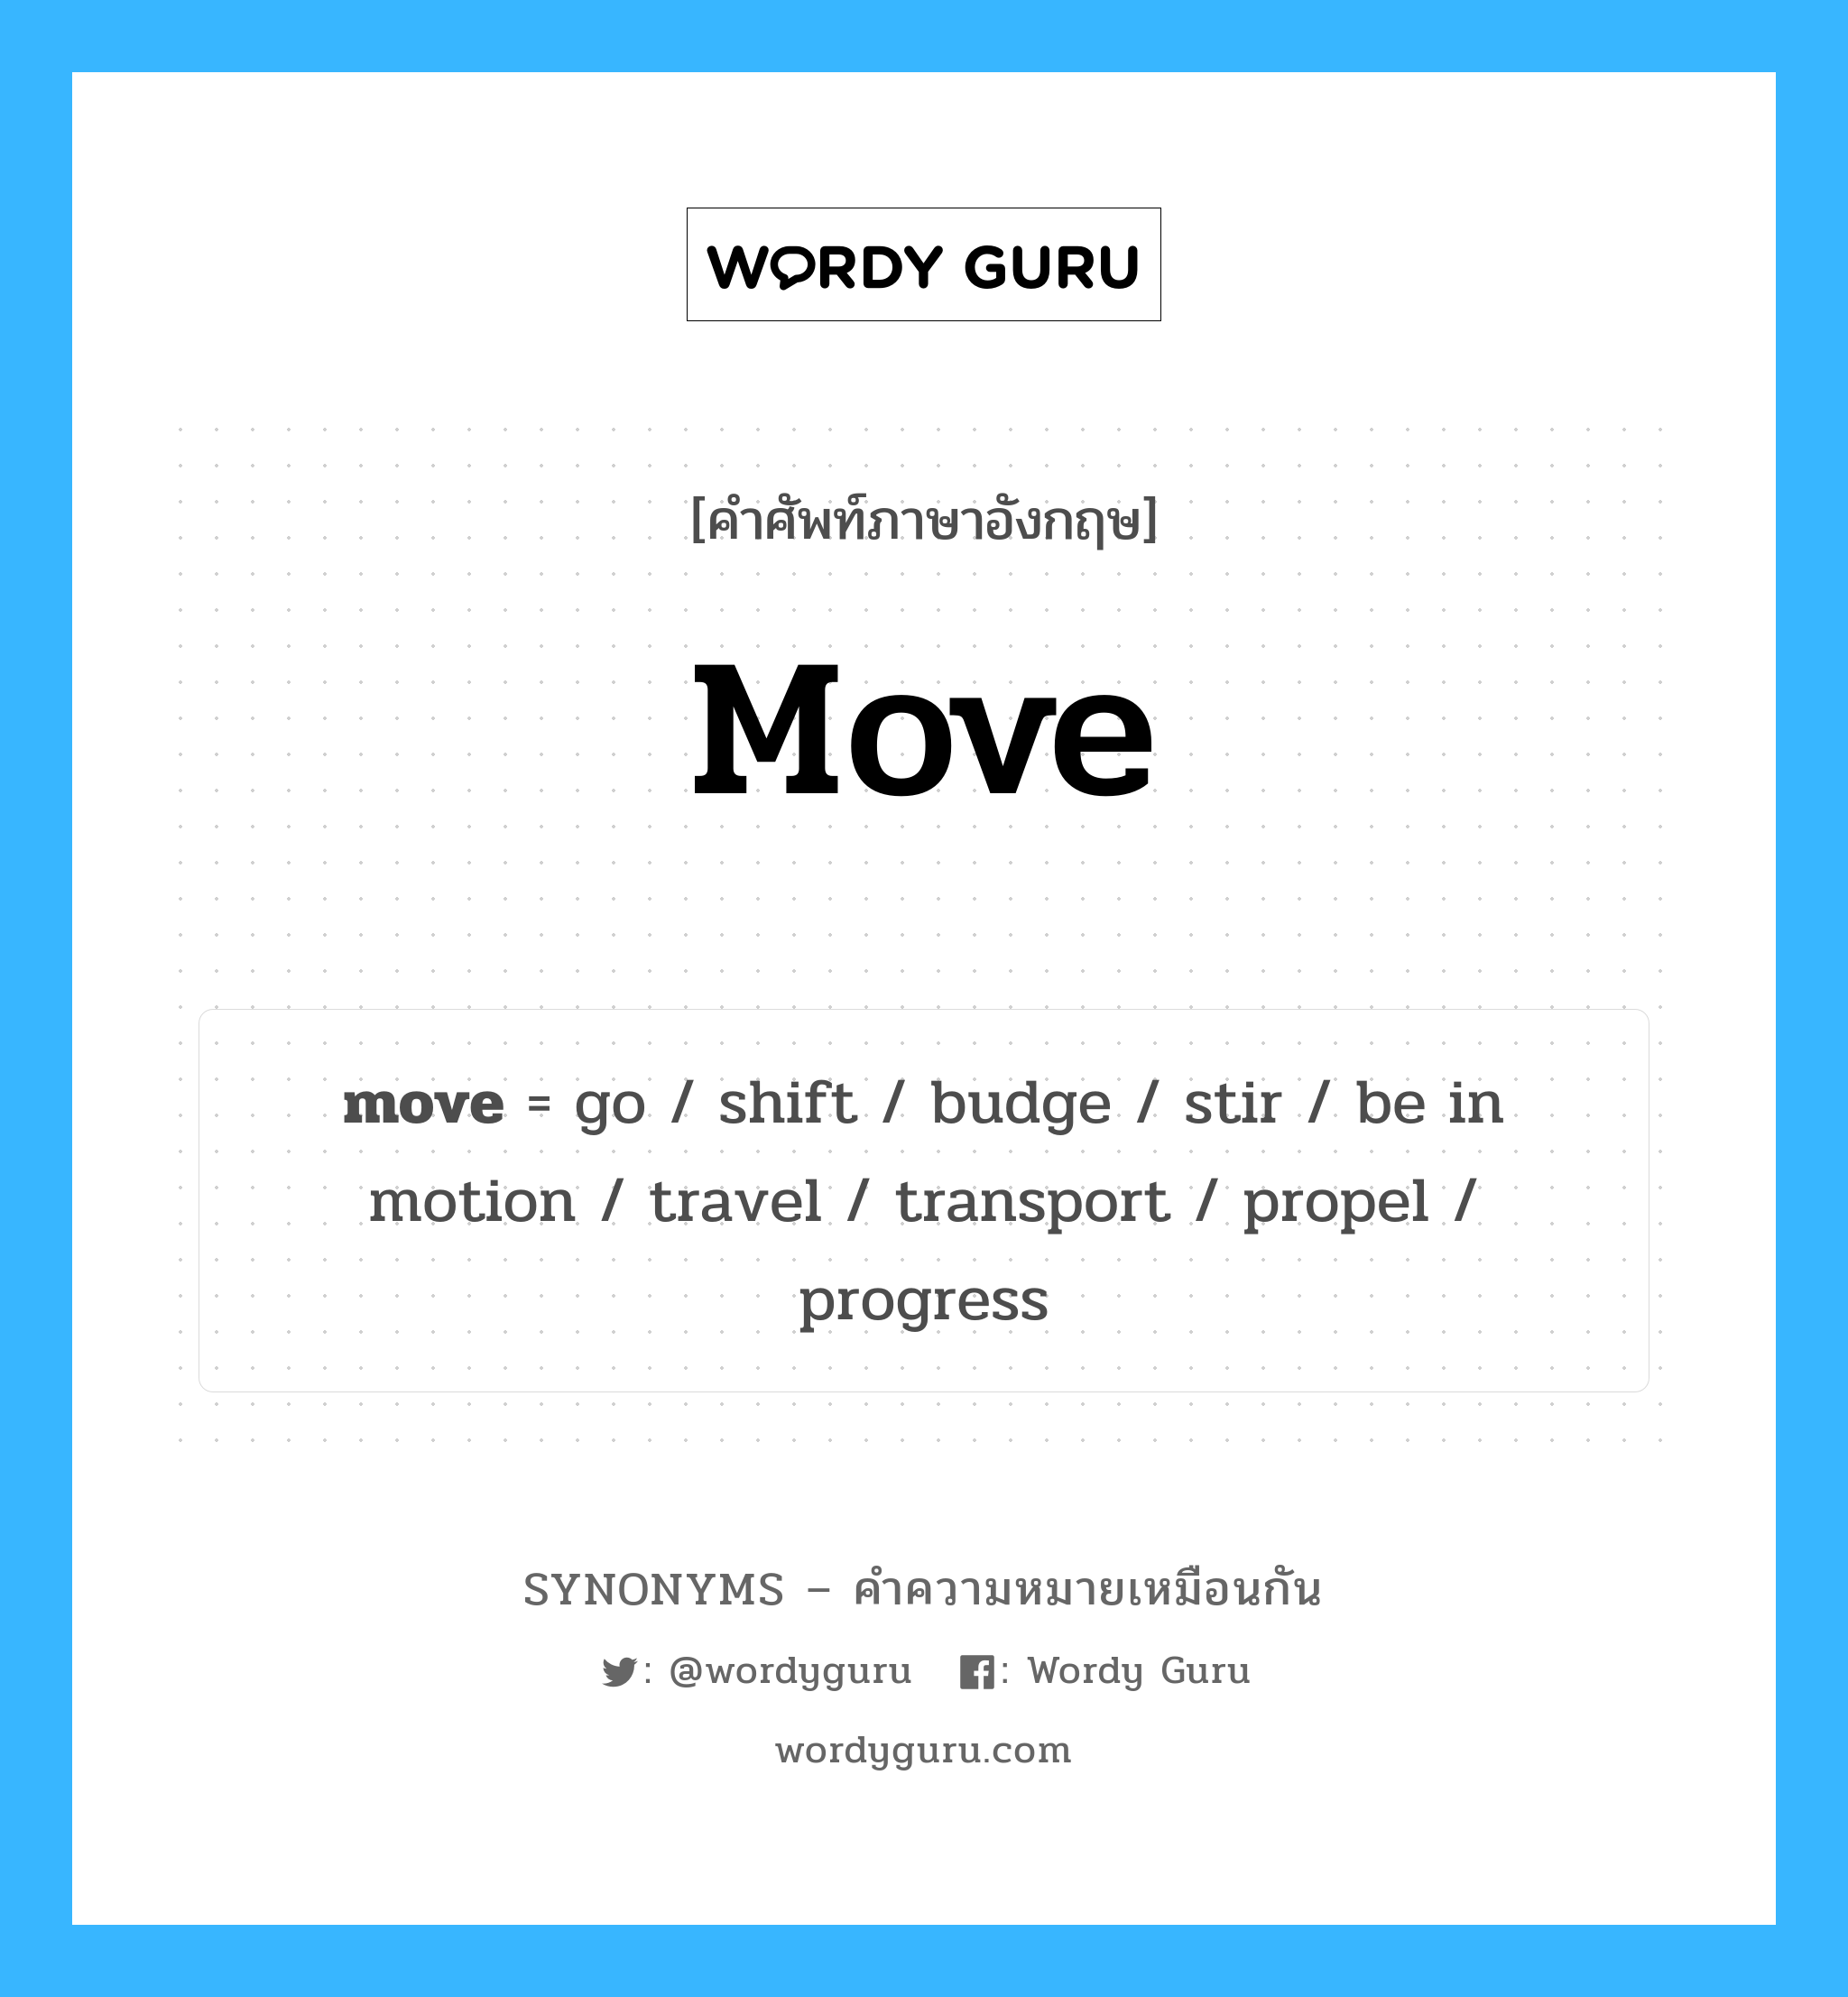 propel เป็นหนึ่งใน move และมีคำอื่น ๆ อีกดังนี้, คำศัพท์ภาษาอังกฤษ propel ความหมายคล้ายกันกับ move แปลว่า ขับเคลื่อน หมวด move